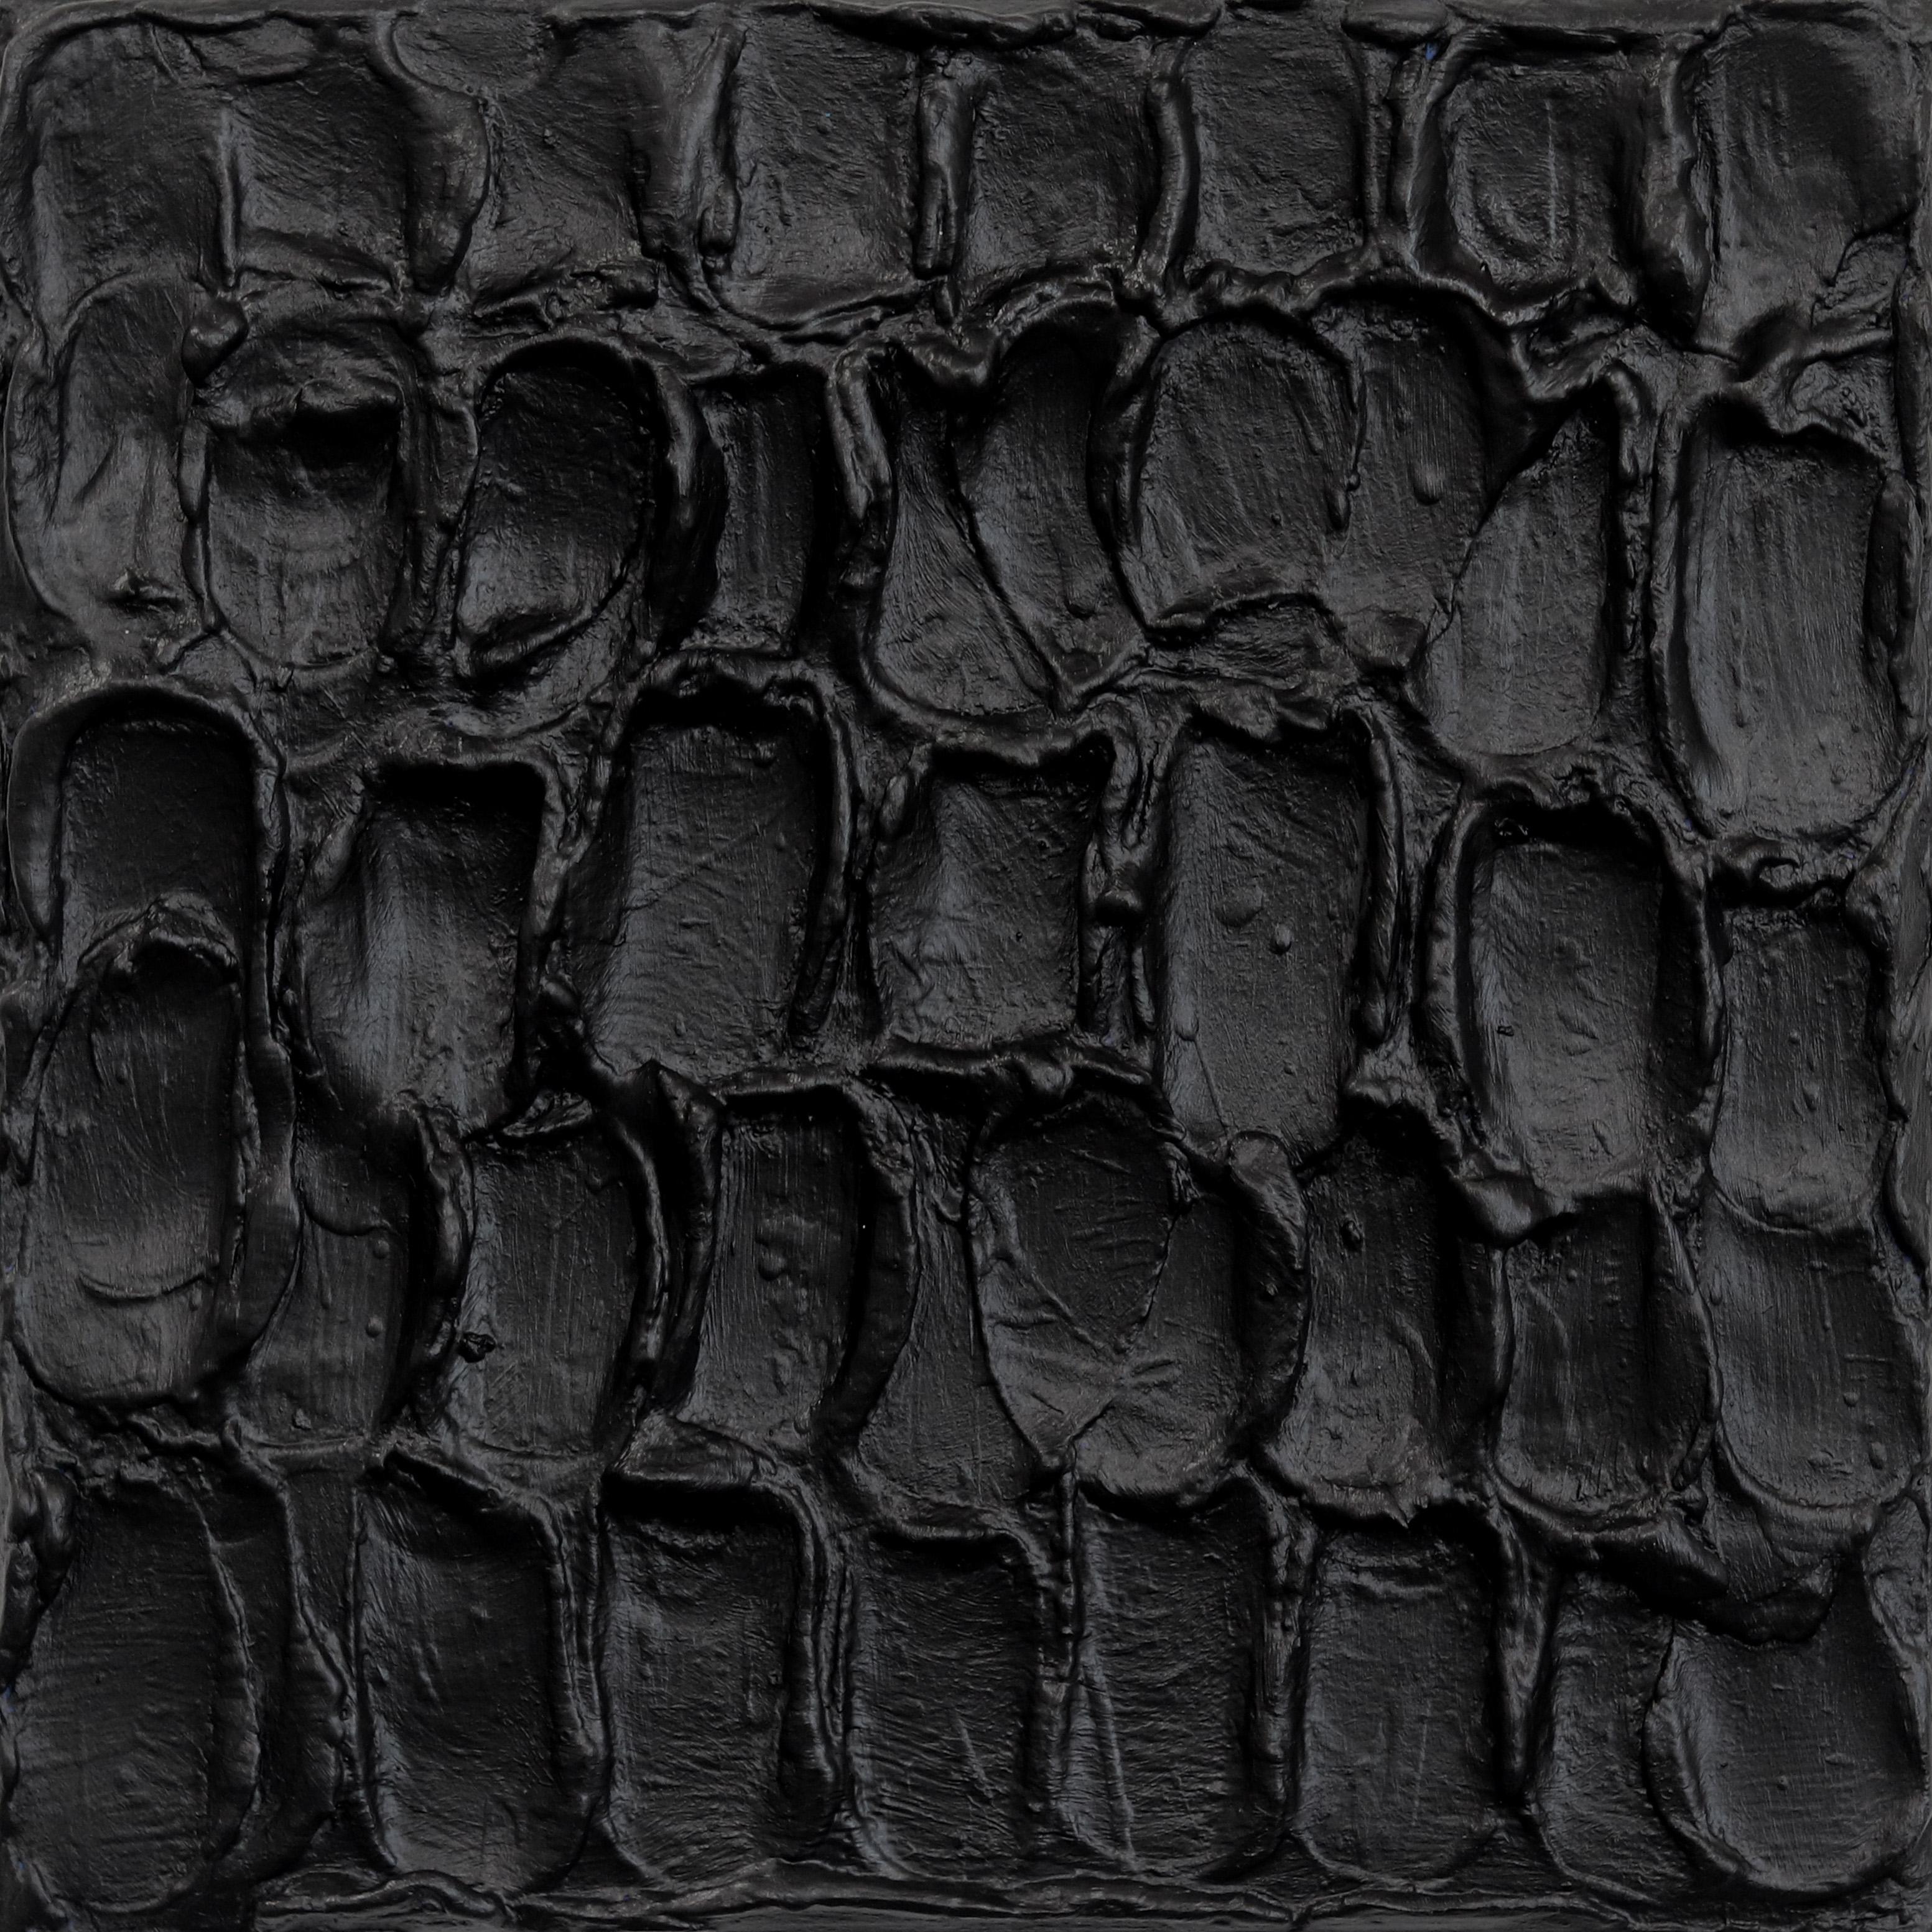 Primitive Modern #3 - Black Textural Abstract Minimalist Artwork on Canvas